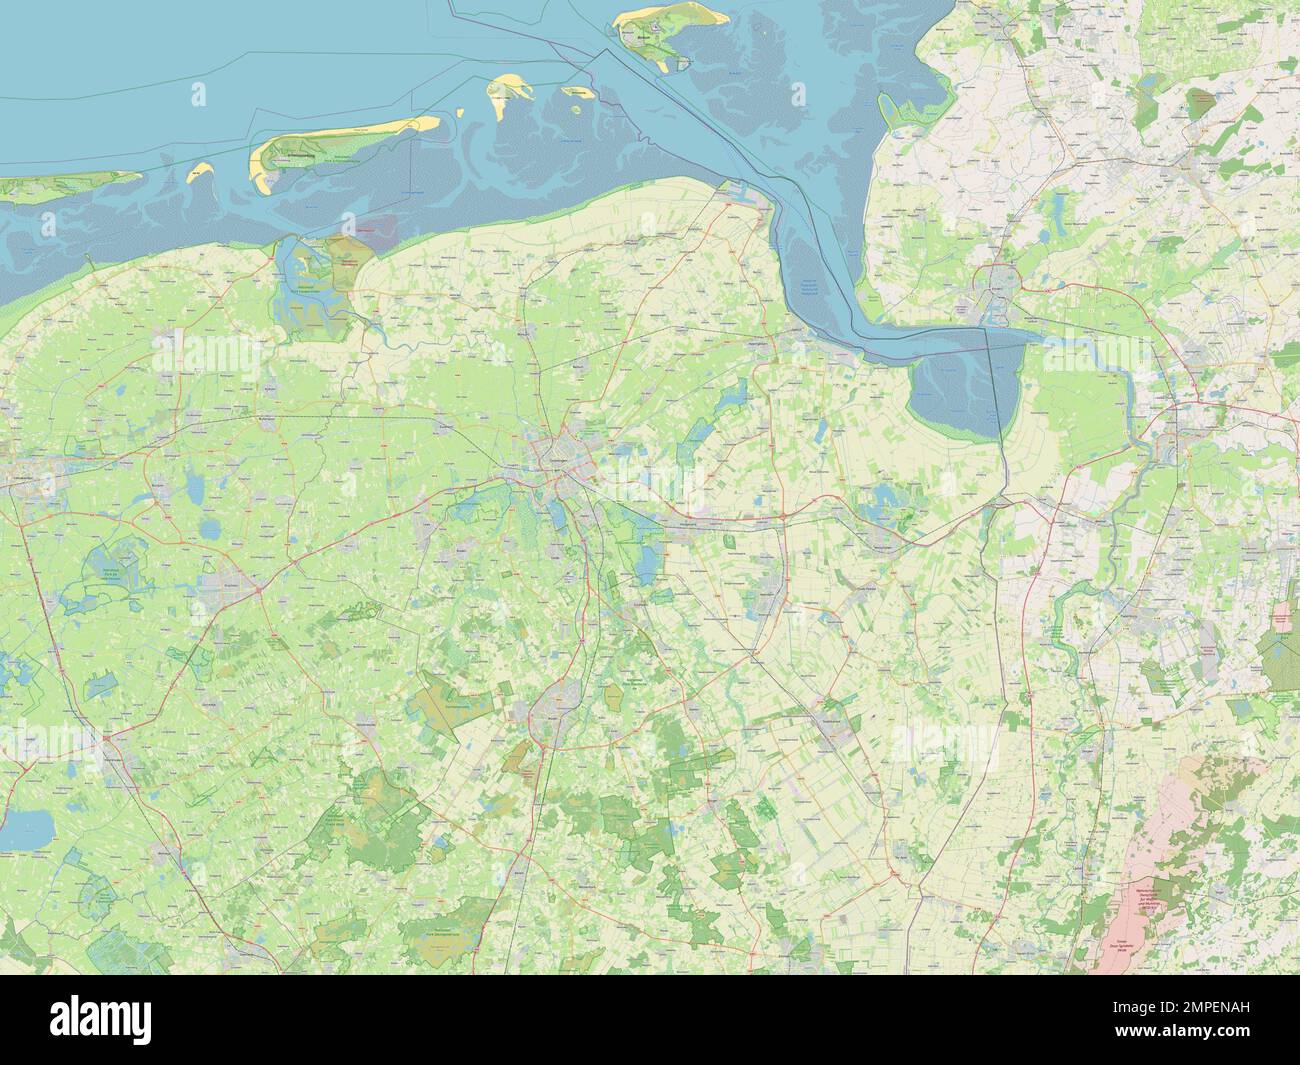 Groningen, province of Netherlands. Open Street Map Stock Photo